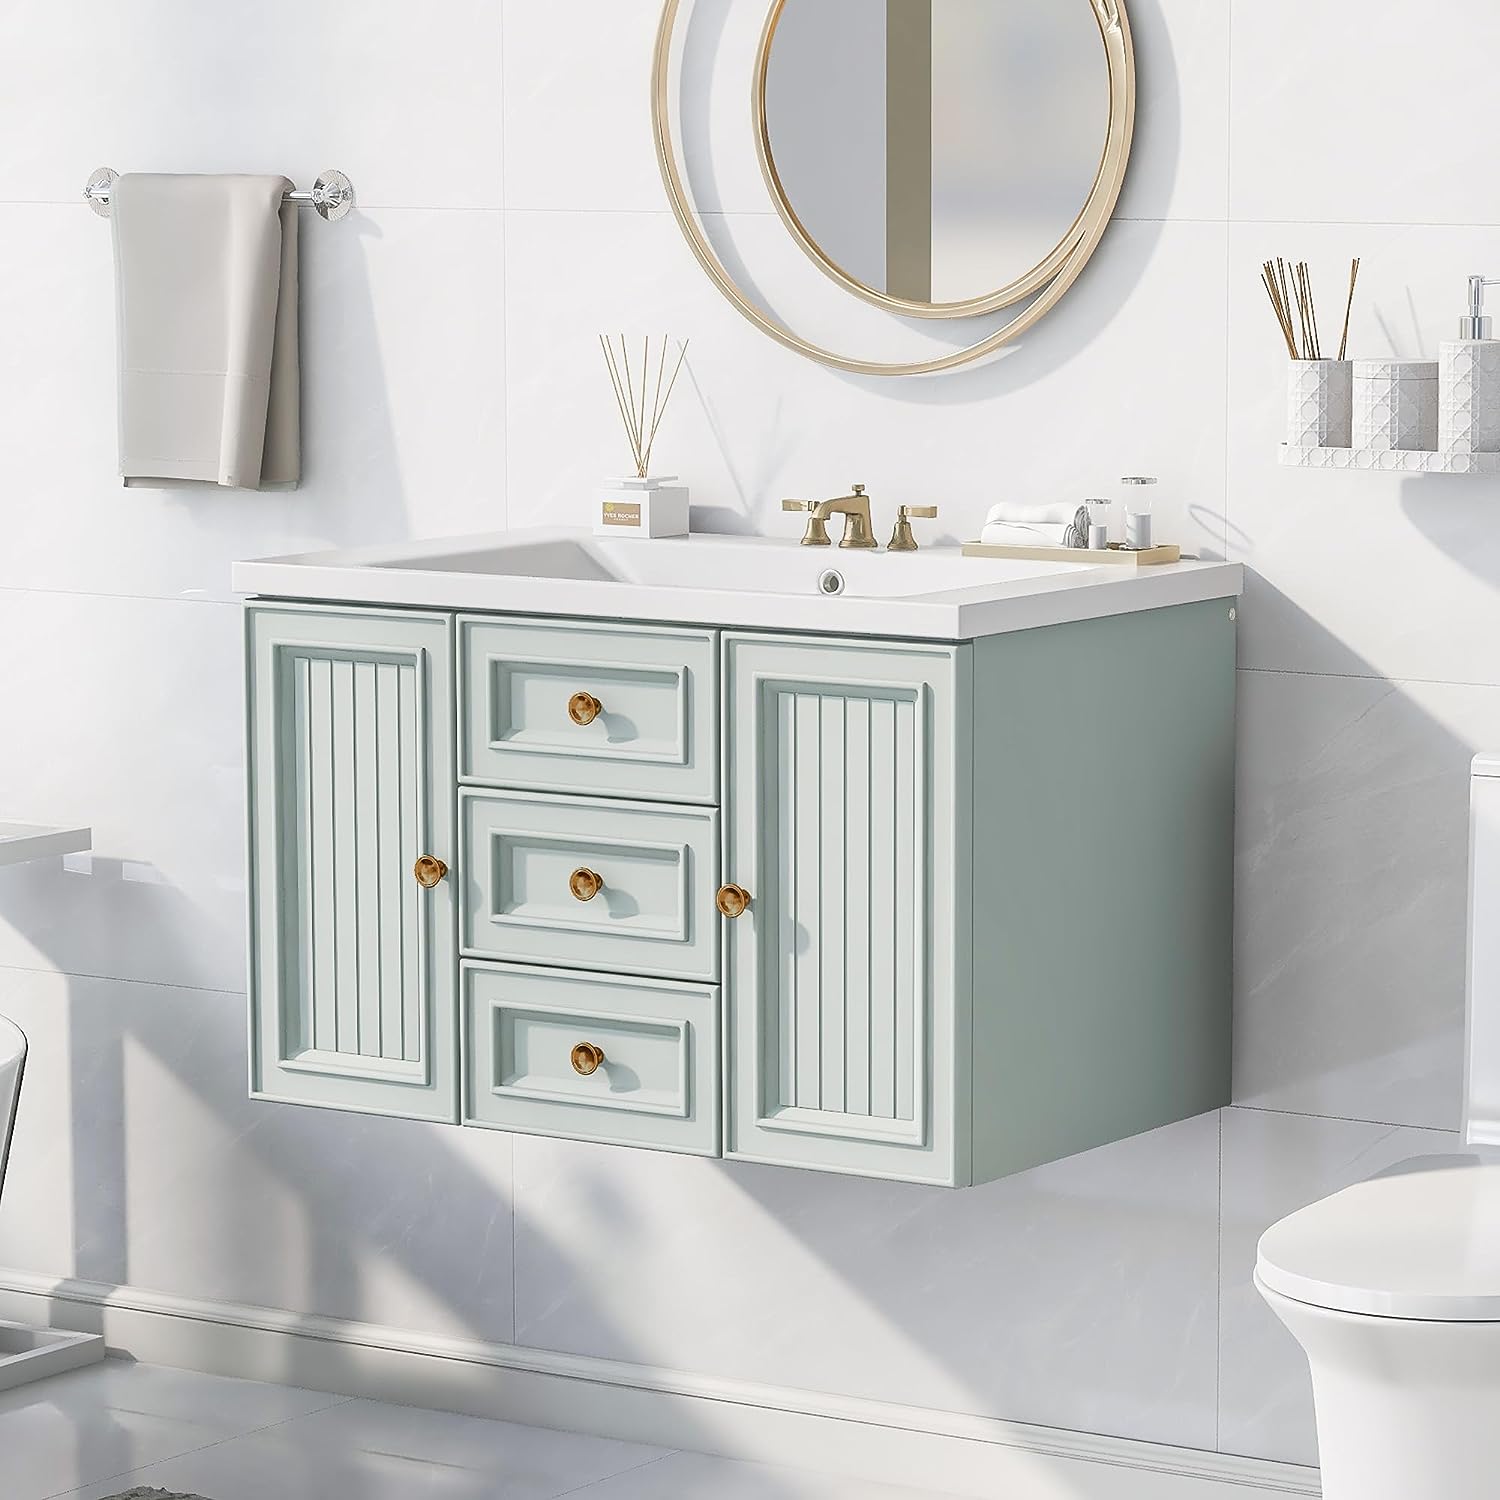 30" Bathroom Vanity with Single Sink Combo, Modern Wooden Bathroom Cabinet (no top) - $175